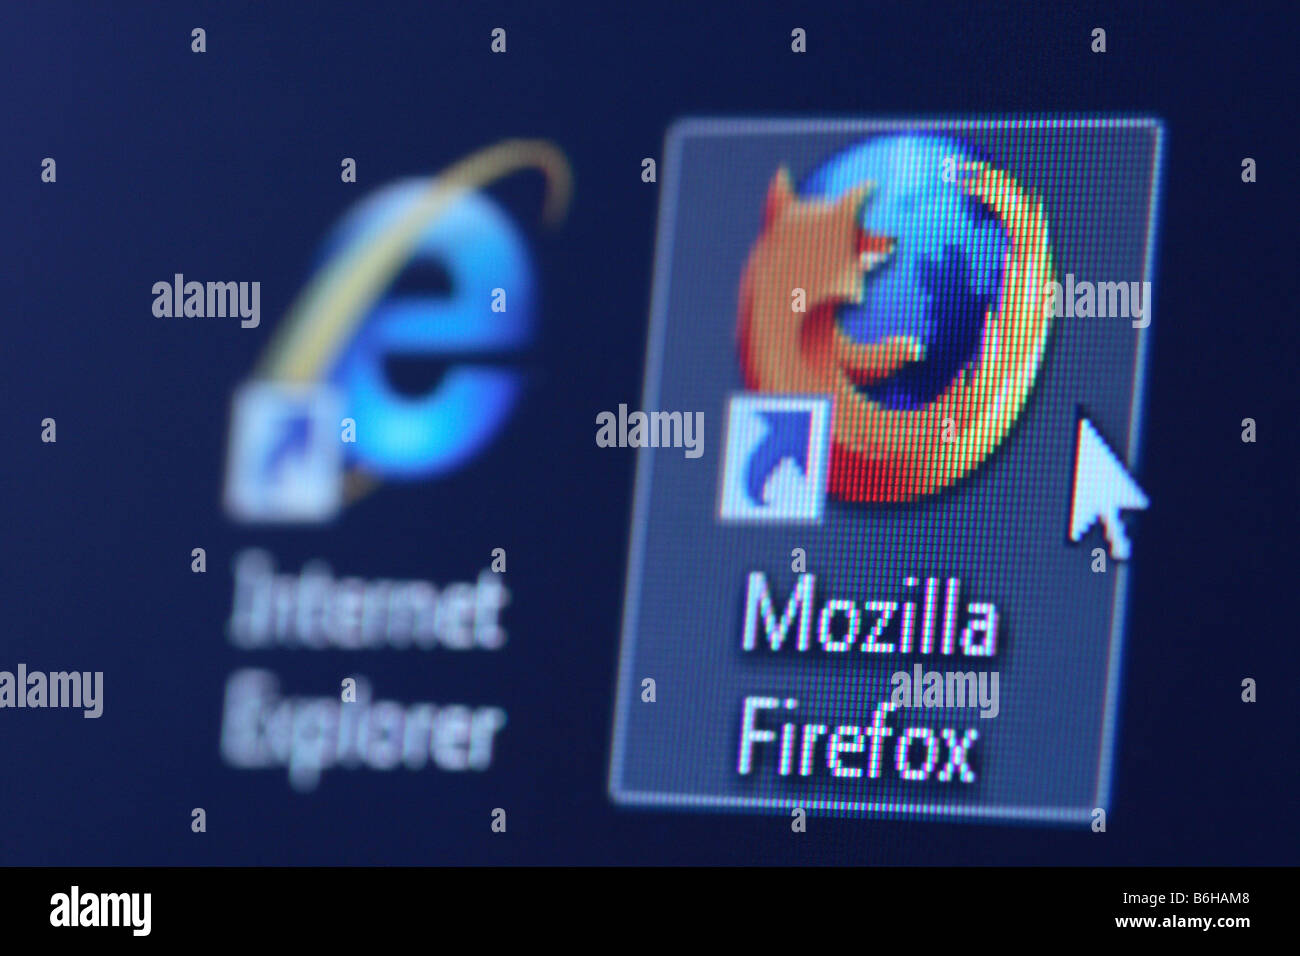 Mozilla Firefox  web browser software icon alongisde the rival Microsoft Internet Explorer IE web browser icon Stock Photo